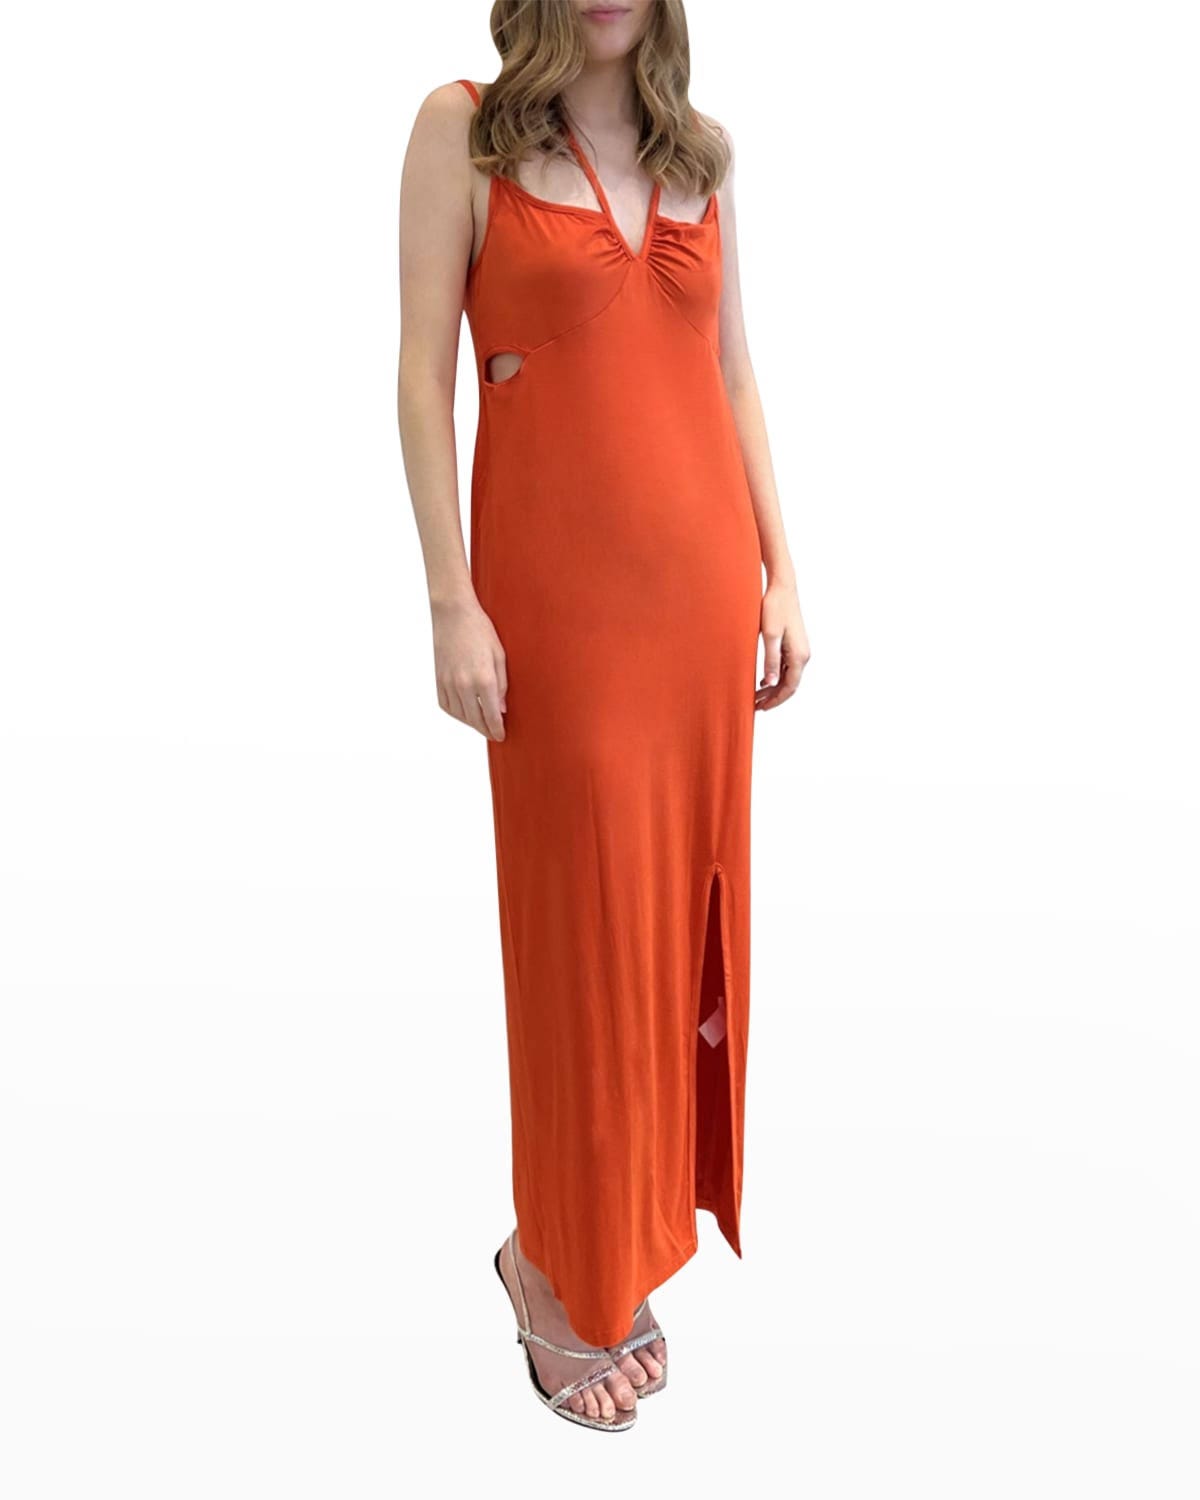 Stylish Maternity Cutout Maxi Dress in Orange | Image